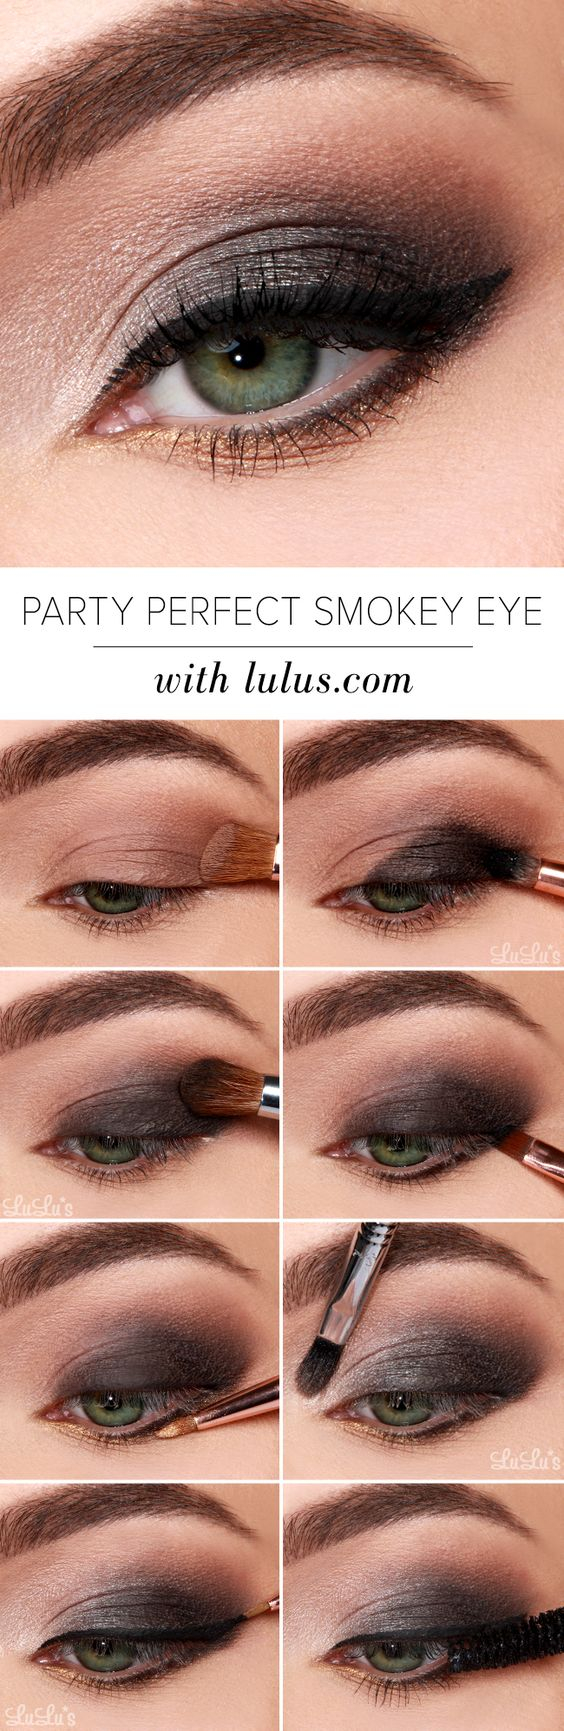 Easy Evening Eye Makeup 40 Hottest Smokey Eye Makeup Ideas 2019 Smokey Eye Tutorials For